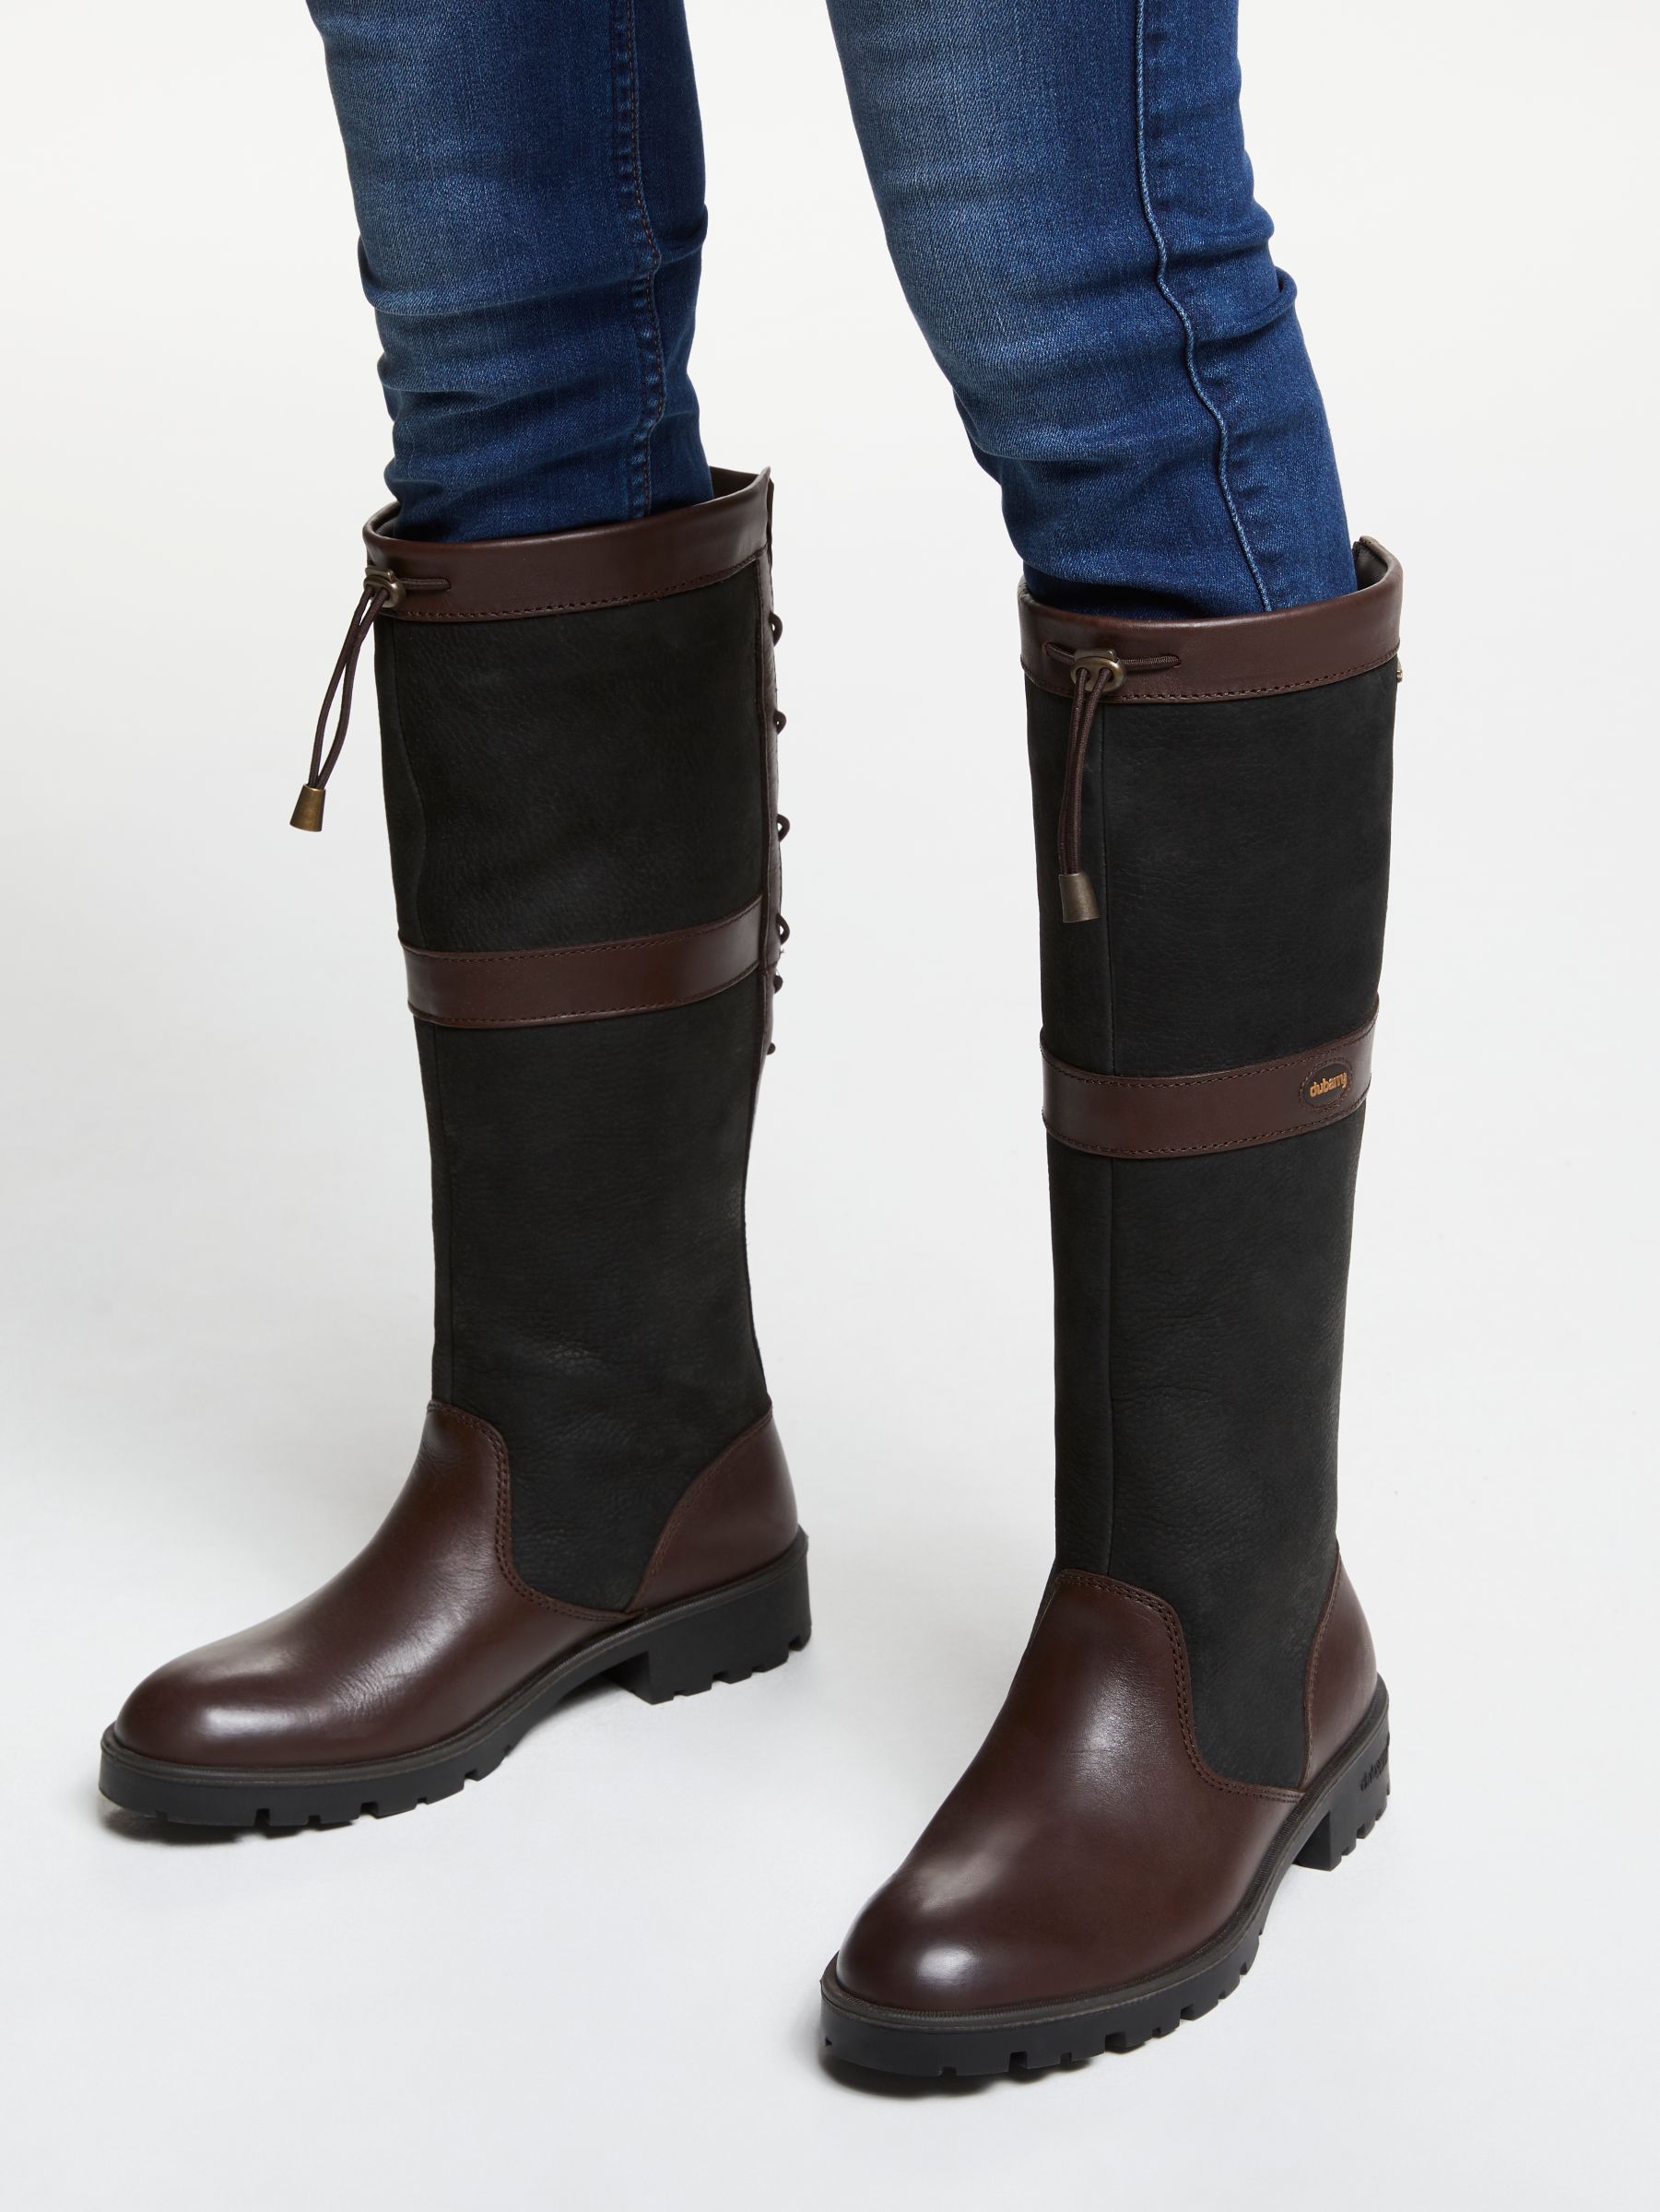 waterproof high boots